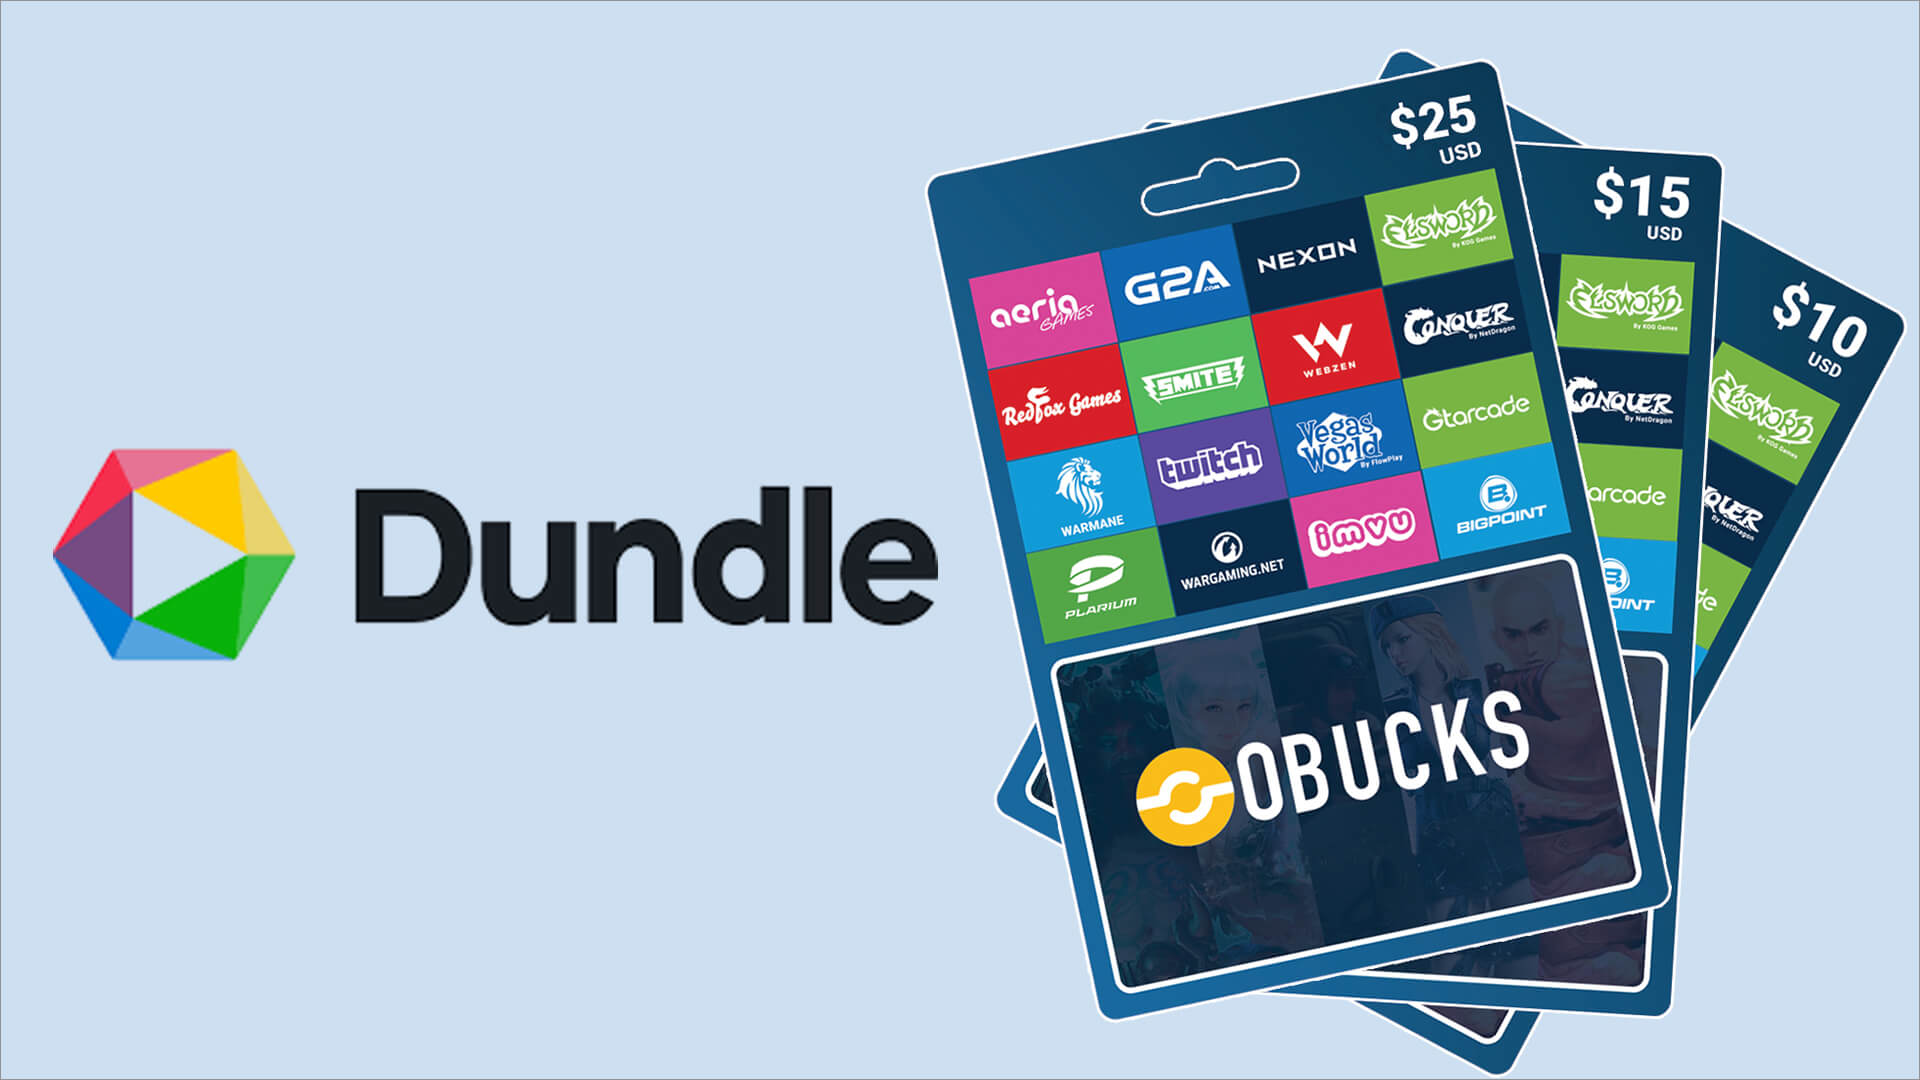 Buy an Obucks card on Dundle dundle.jpg